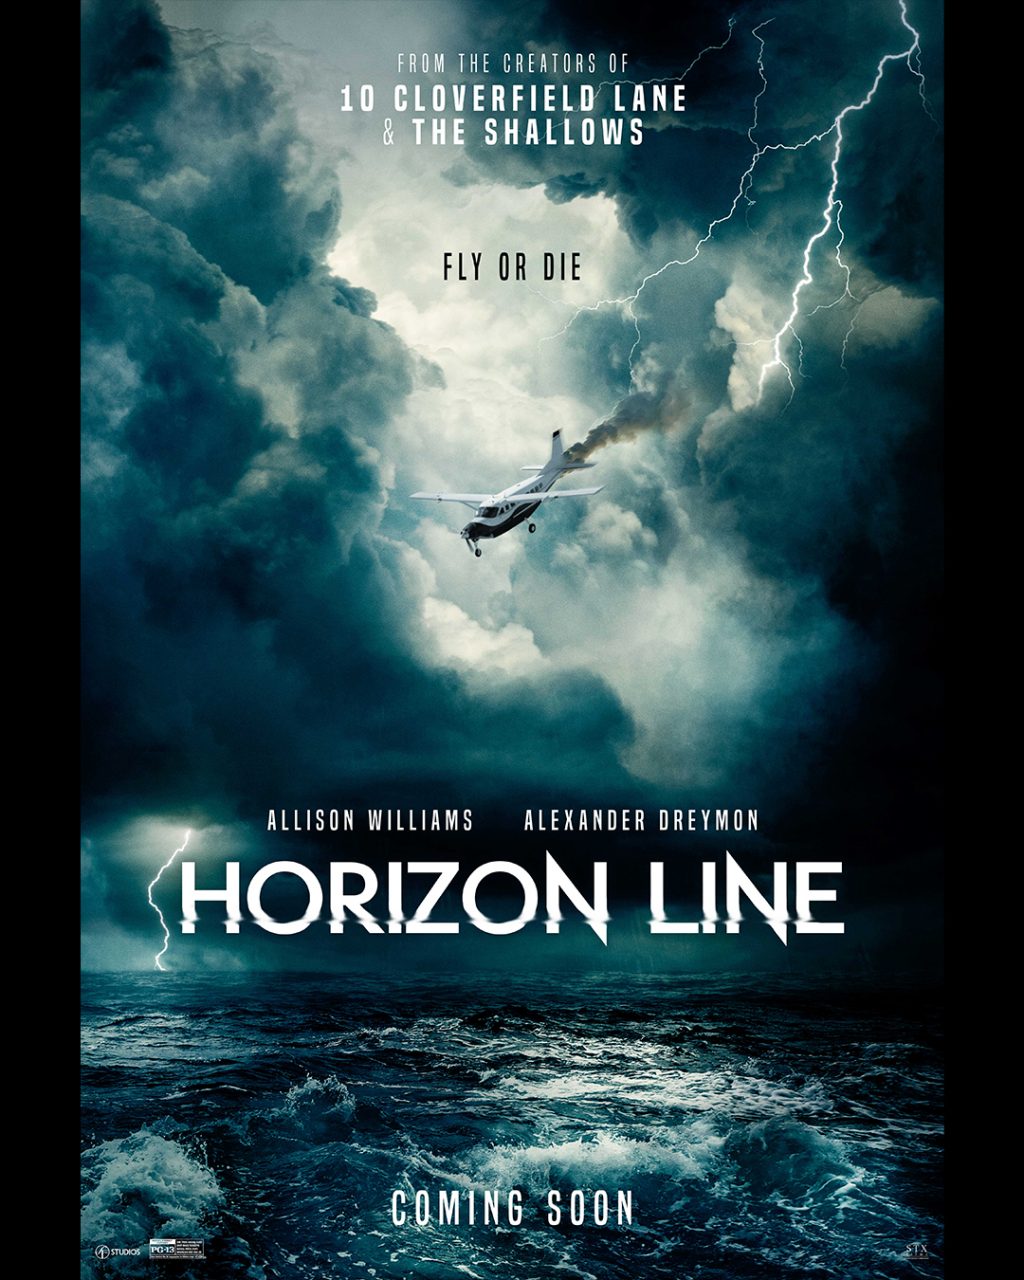 Horizon Line poster (STX Films)